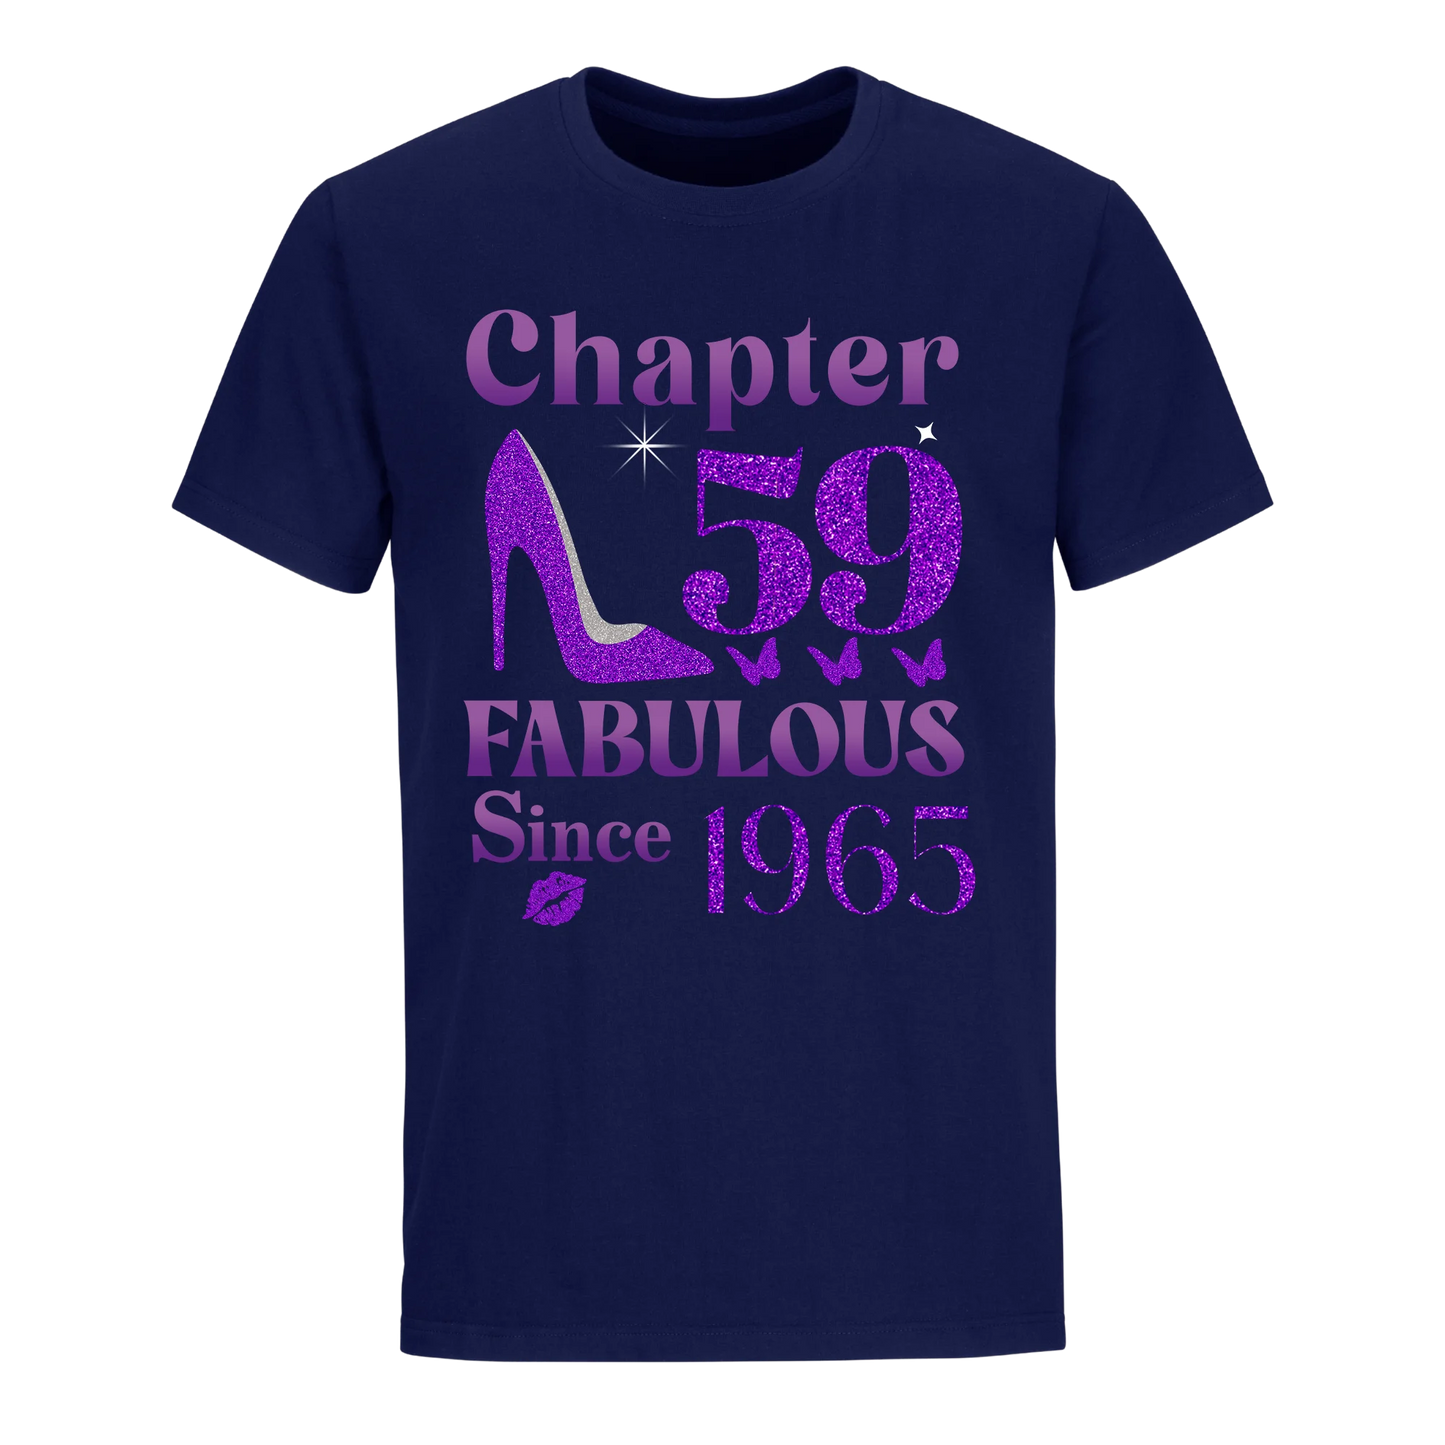 CHAPTER 59TH FABULOUS SINCE 1965 UNISEX SHIRT